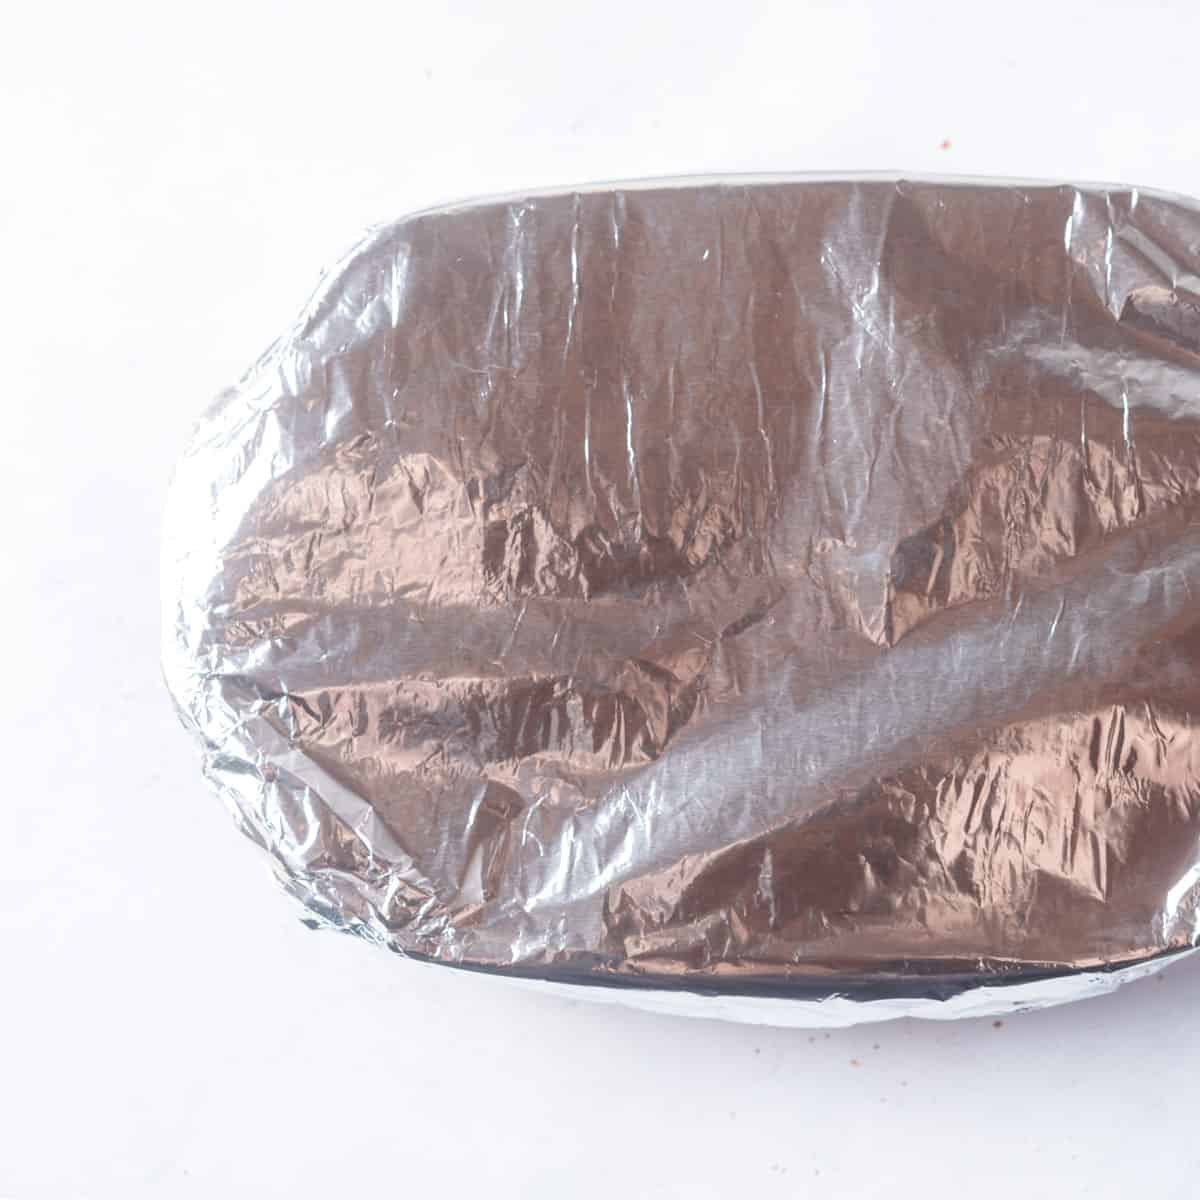 Small rectangular baking dish covered in aluminum foil.